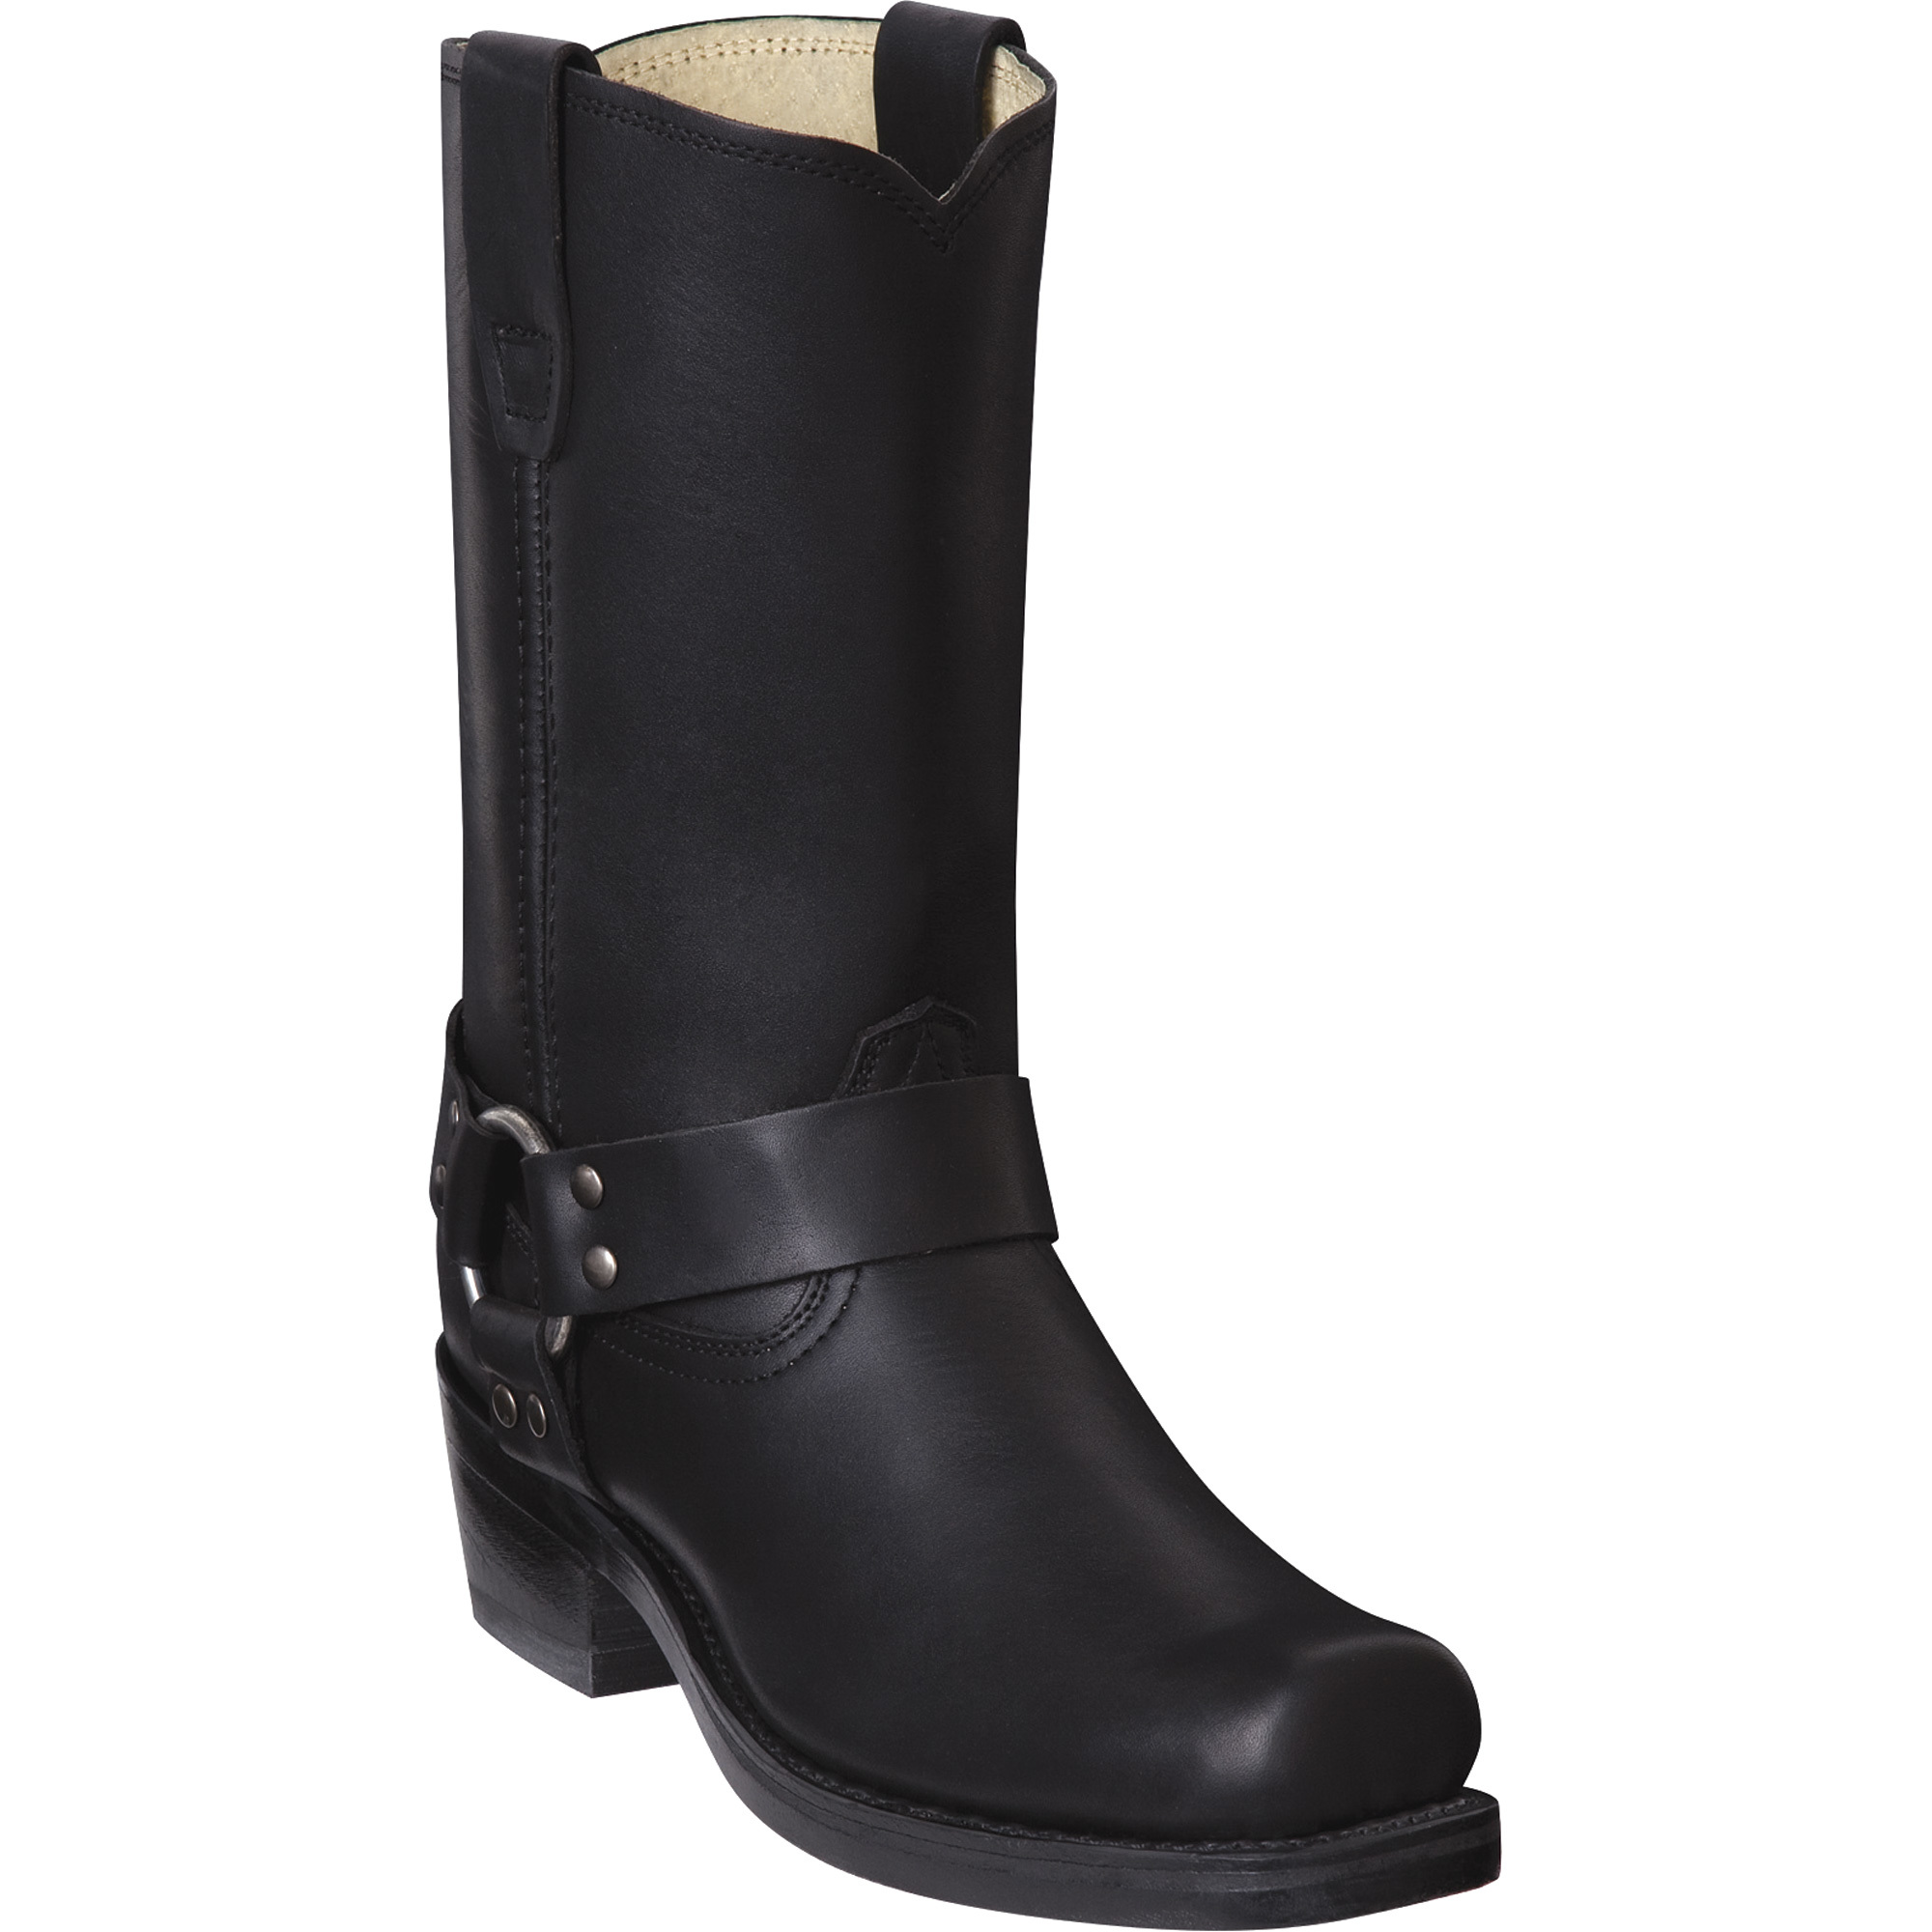 Durango Men's 11Inch Harness Boot - Black, Size 9 1/2 Wide, Model DB 510